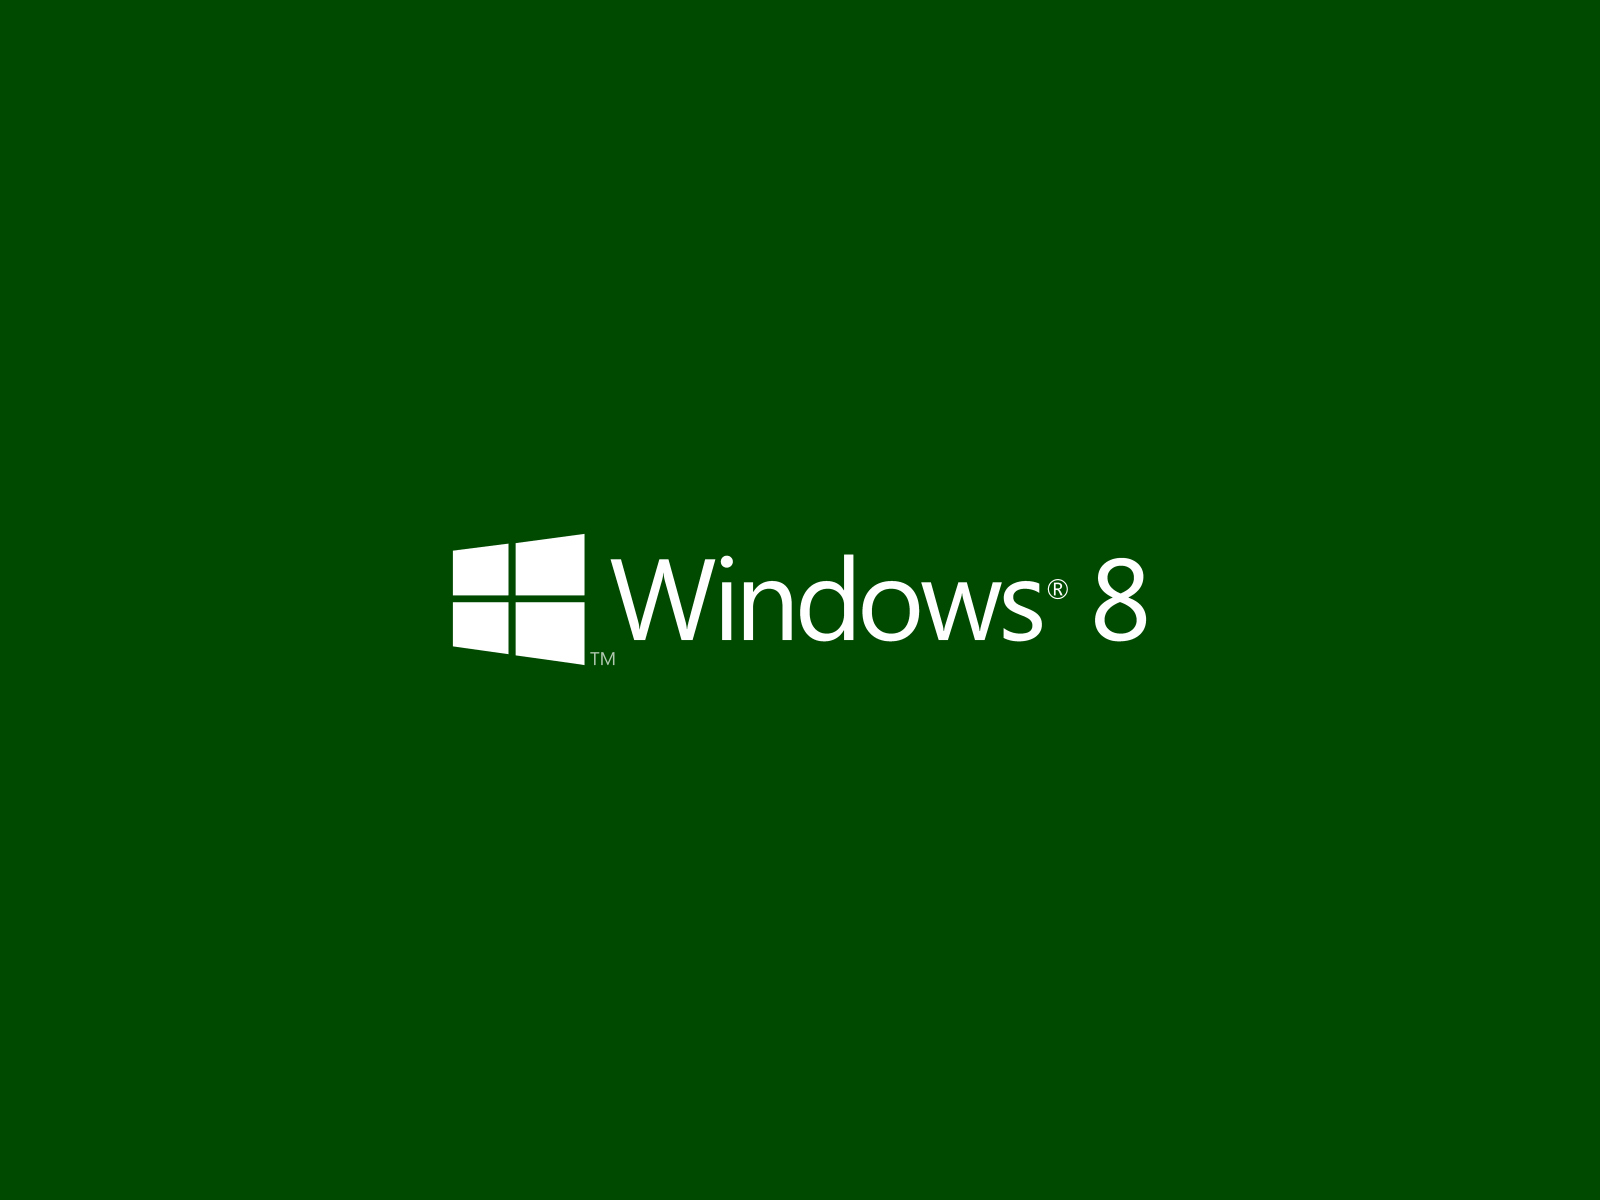 Microsoft Backgrounds Free